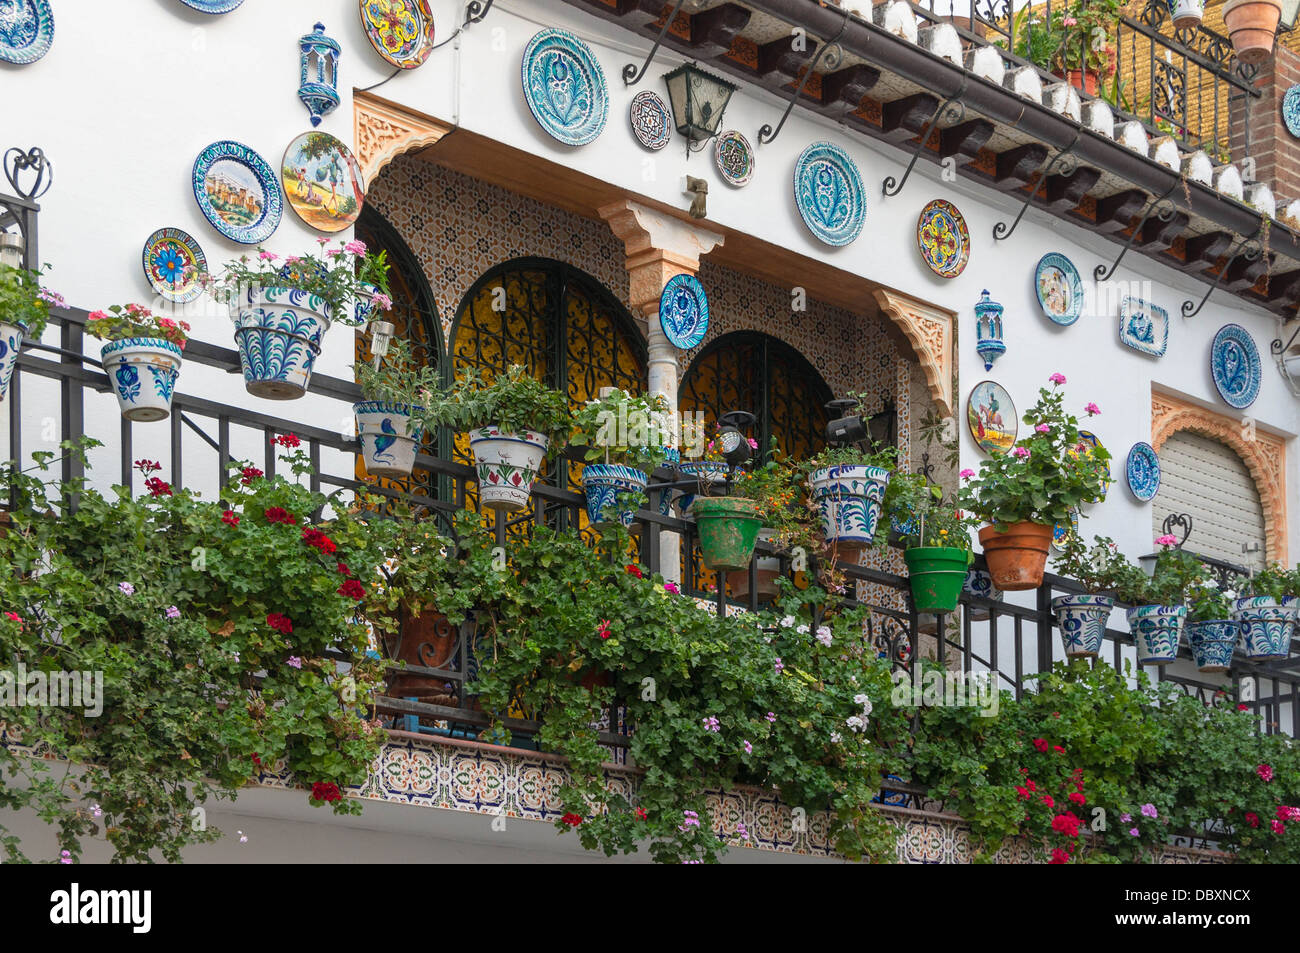 A decorated facade in the streets of Albayzin neighborhood, Granada, Spain. Stock Photo